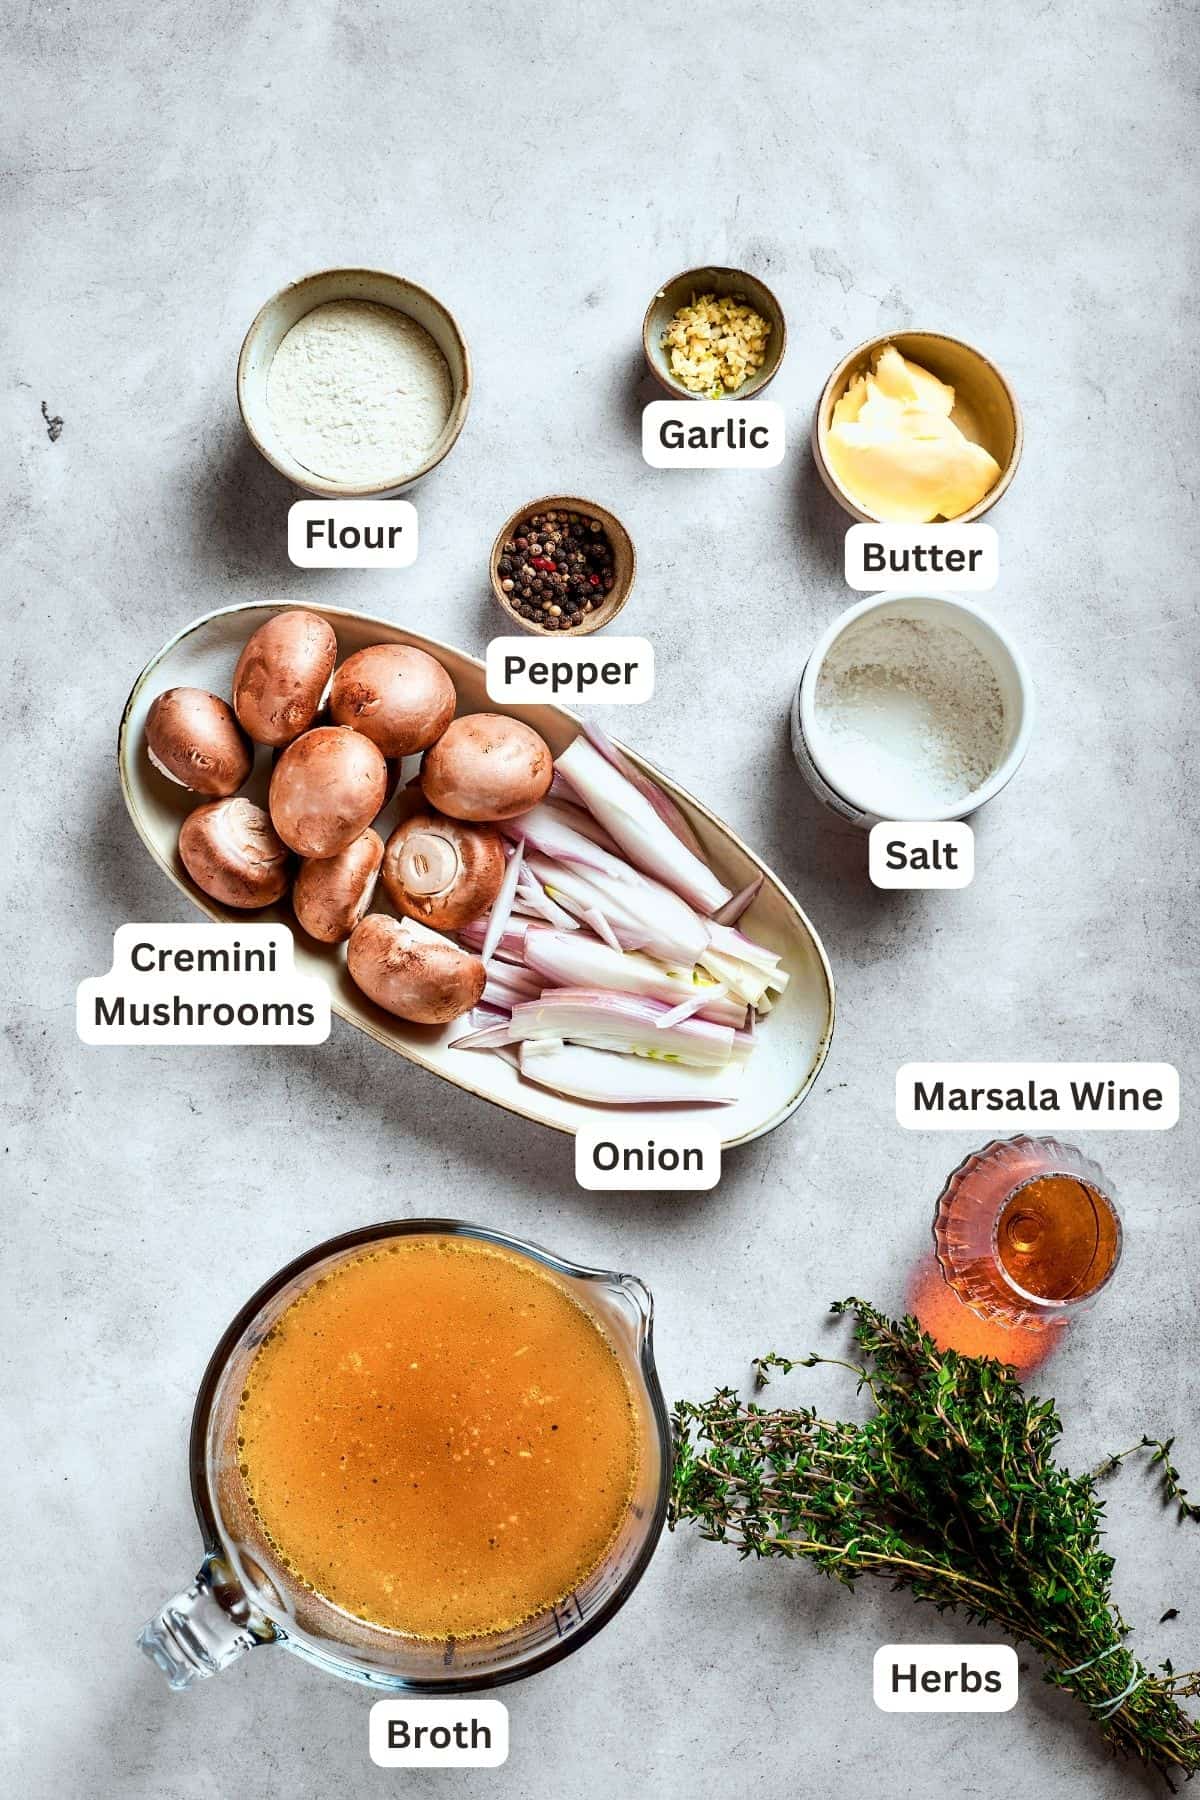 Ingredients for mushroom gravy are shown: mushrooms, flour, salt, Marsala wine, butter, garlic, onion, broth, pepper.